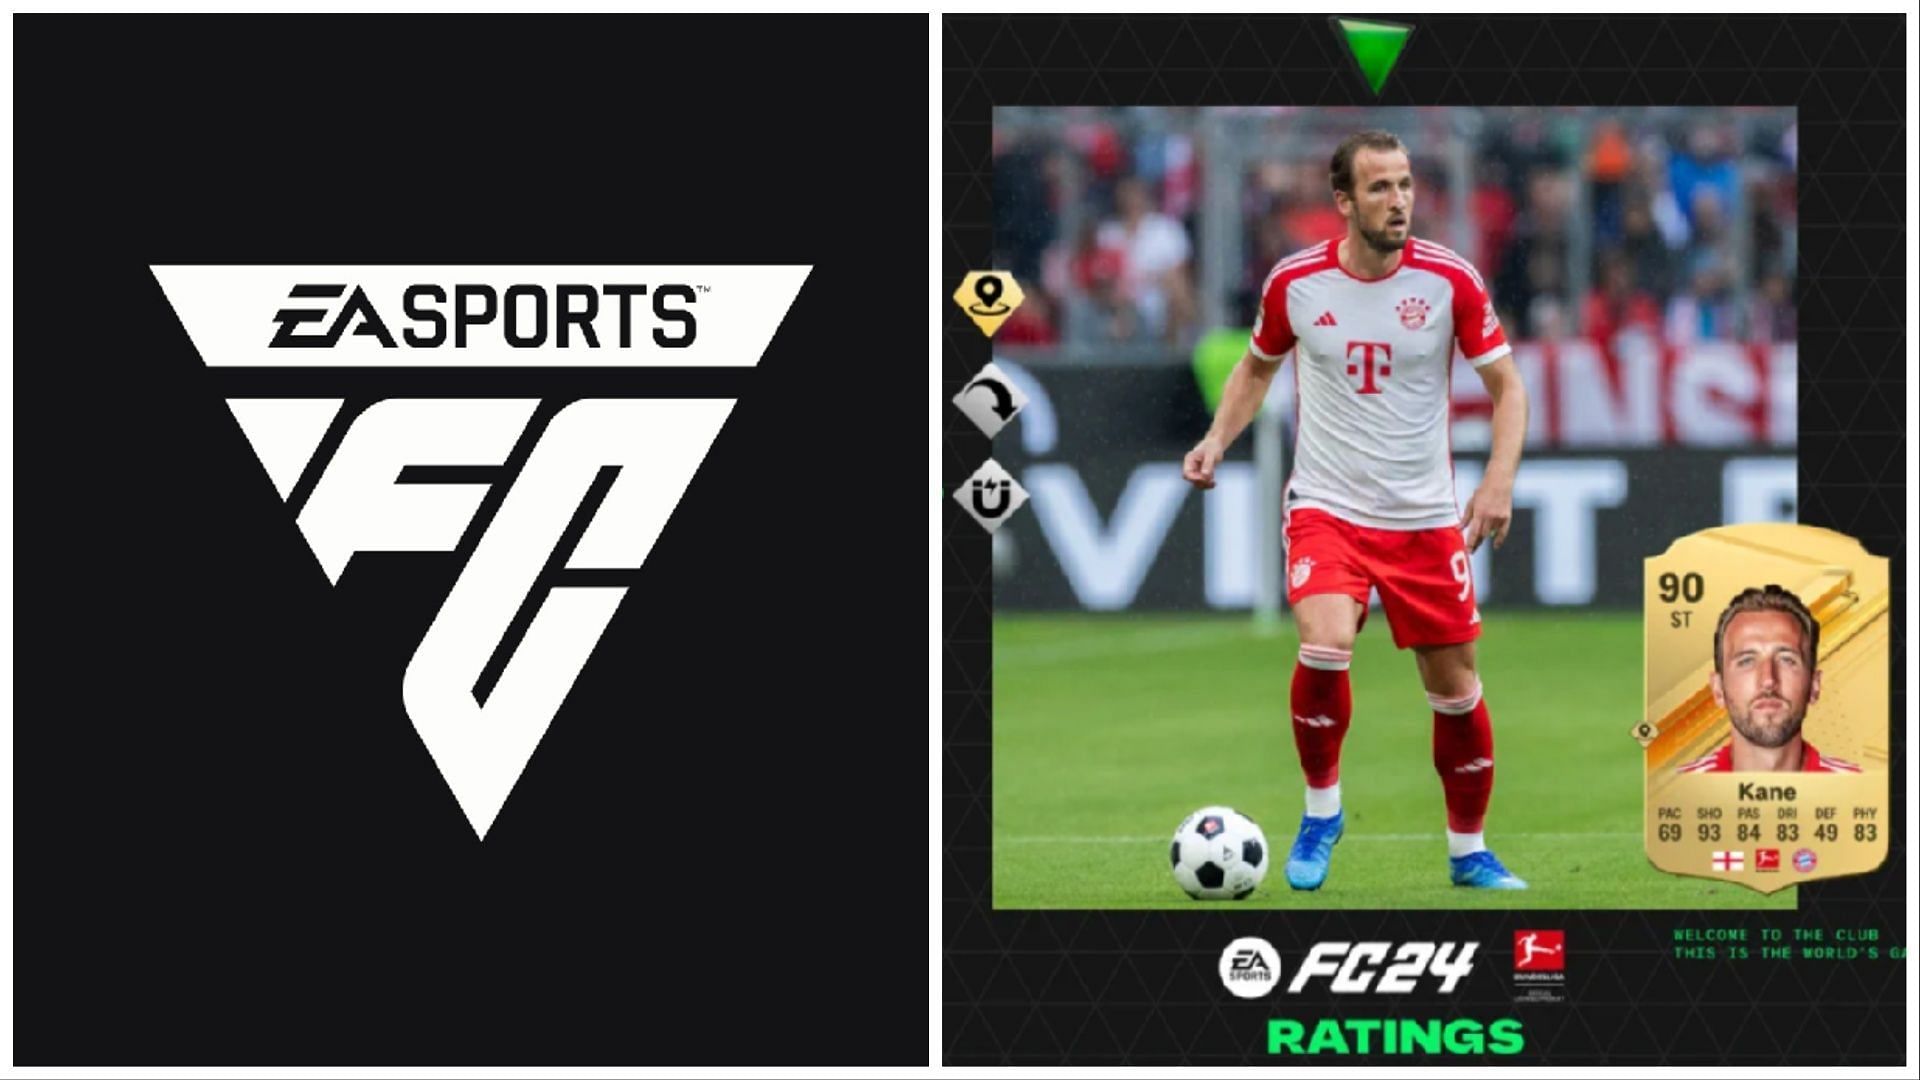 Bundesliga player ratings have been revealed (Images via EA Sports)